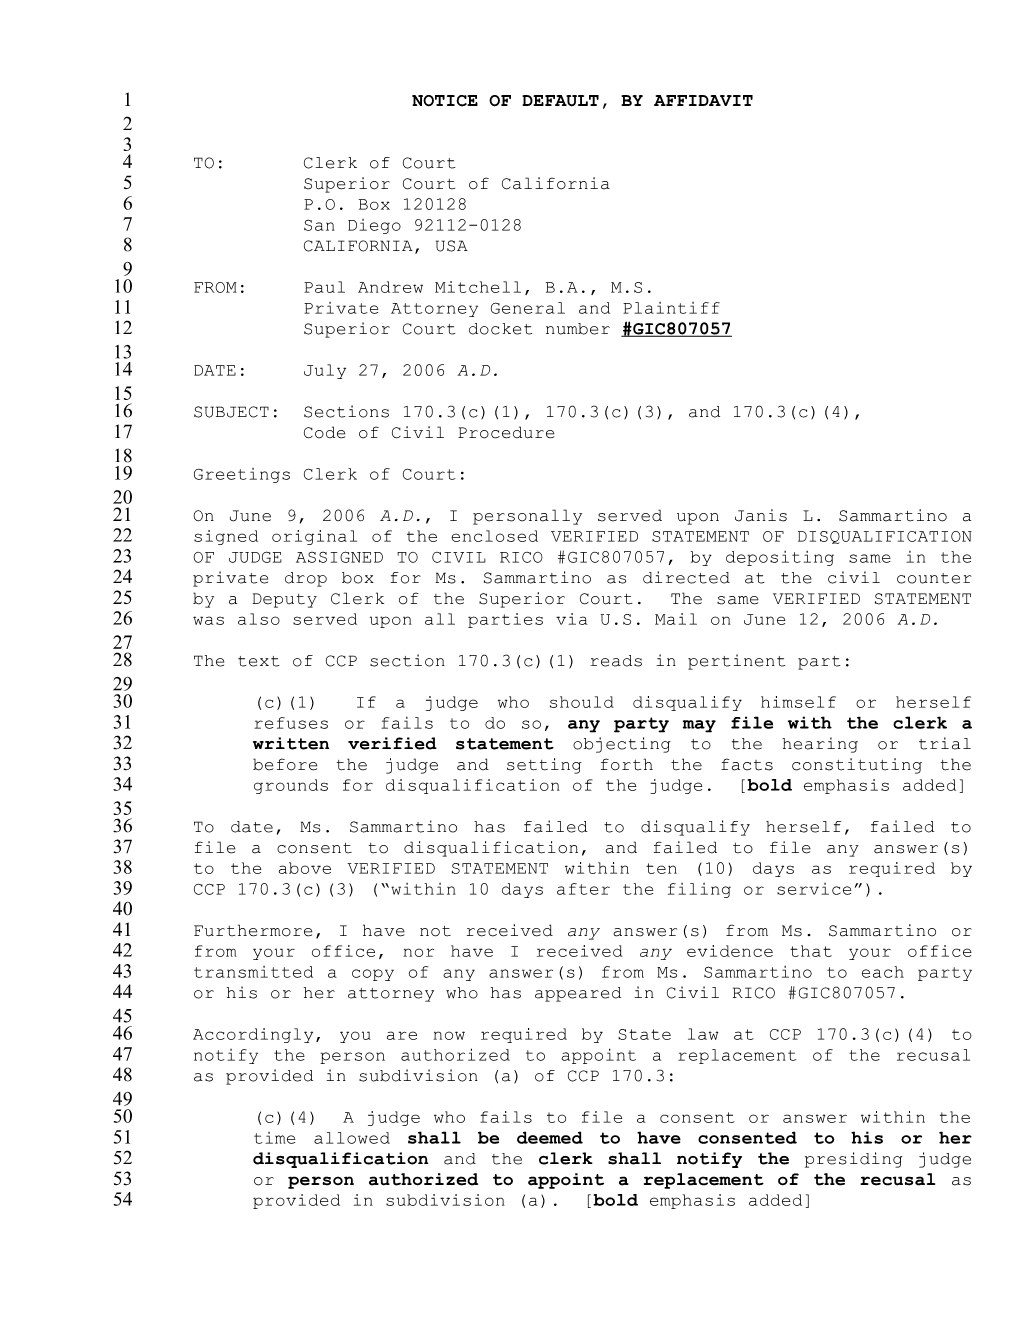 Notice of Default, by Affidavit